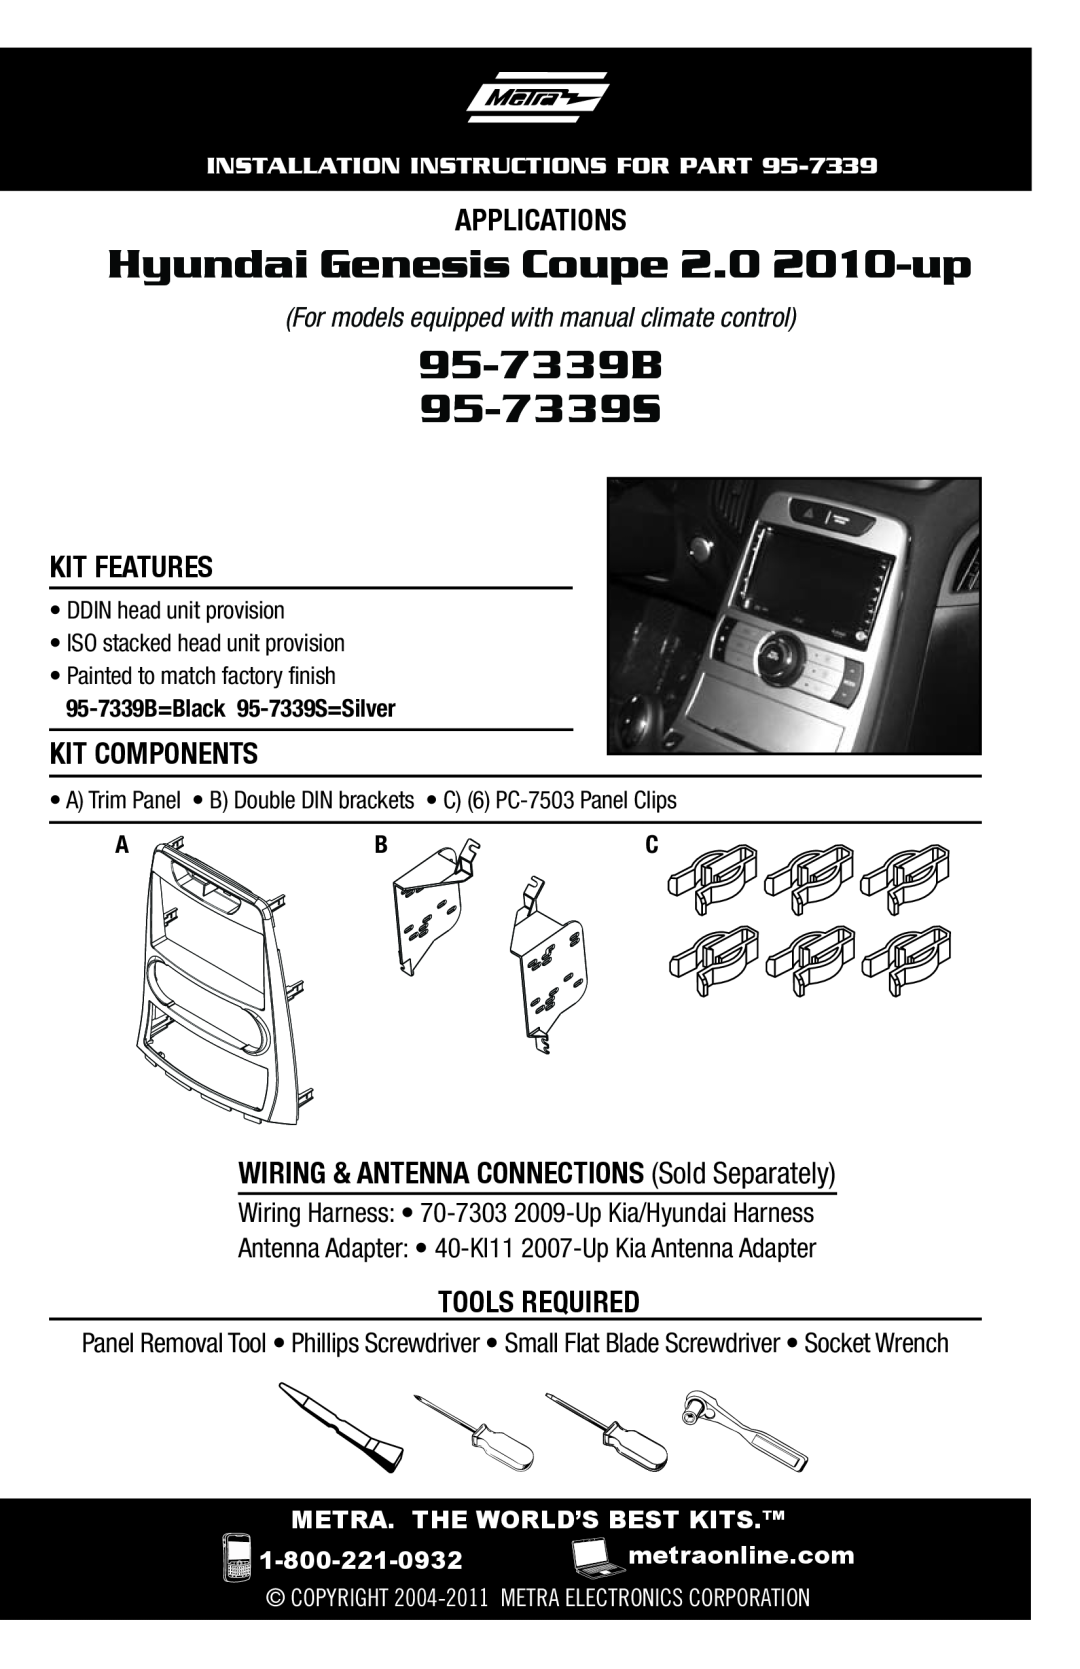 Metra Electronics installation instructions Hyundai Genesis Coupe 2.0 2010-up, 95-7339B 95-7339S, Applications, A B C 